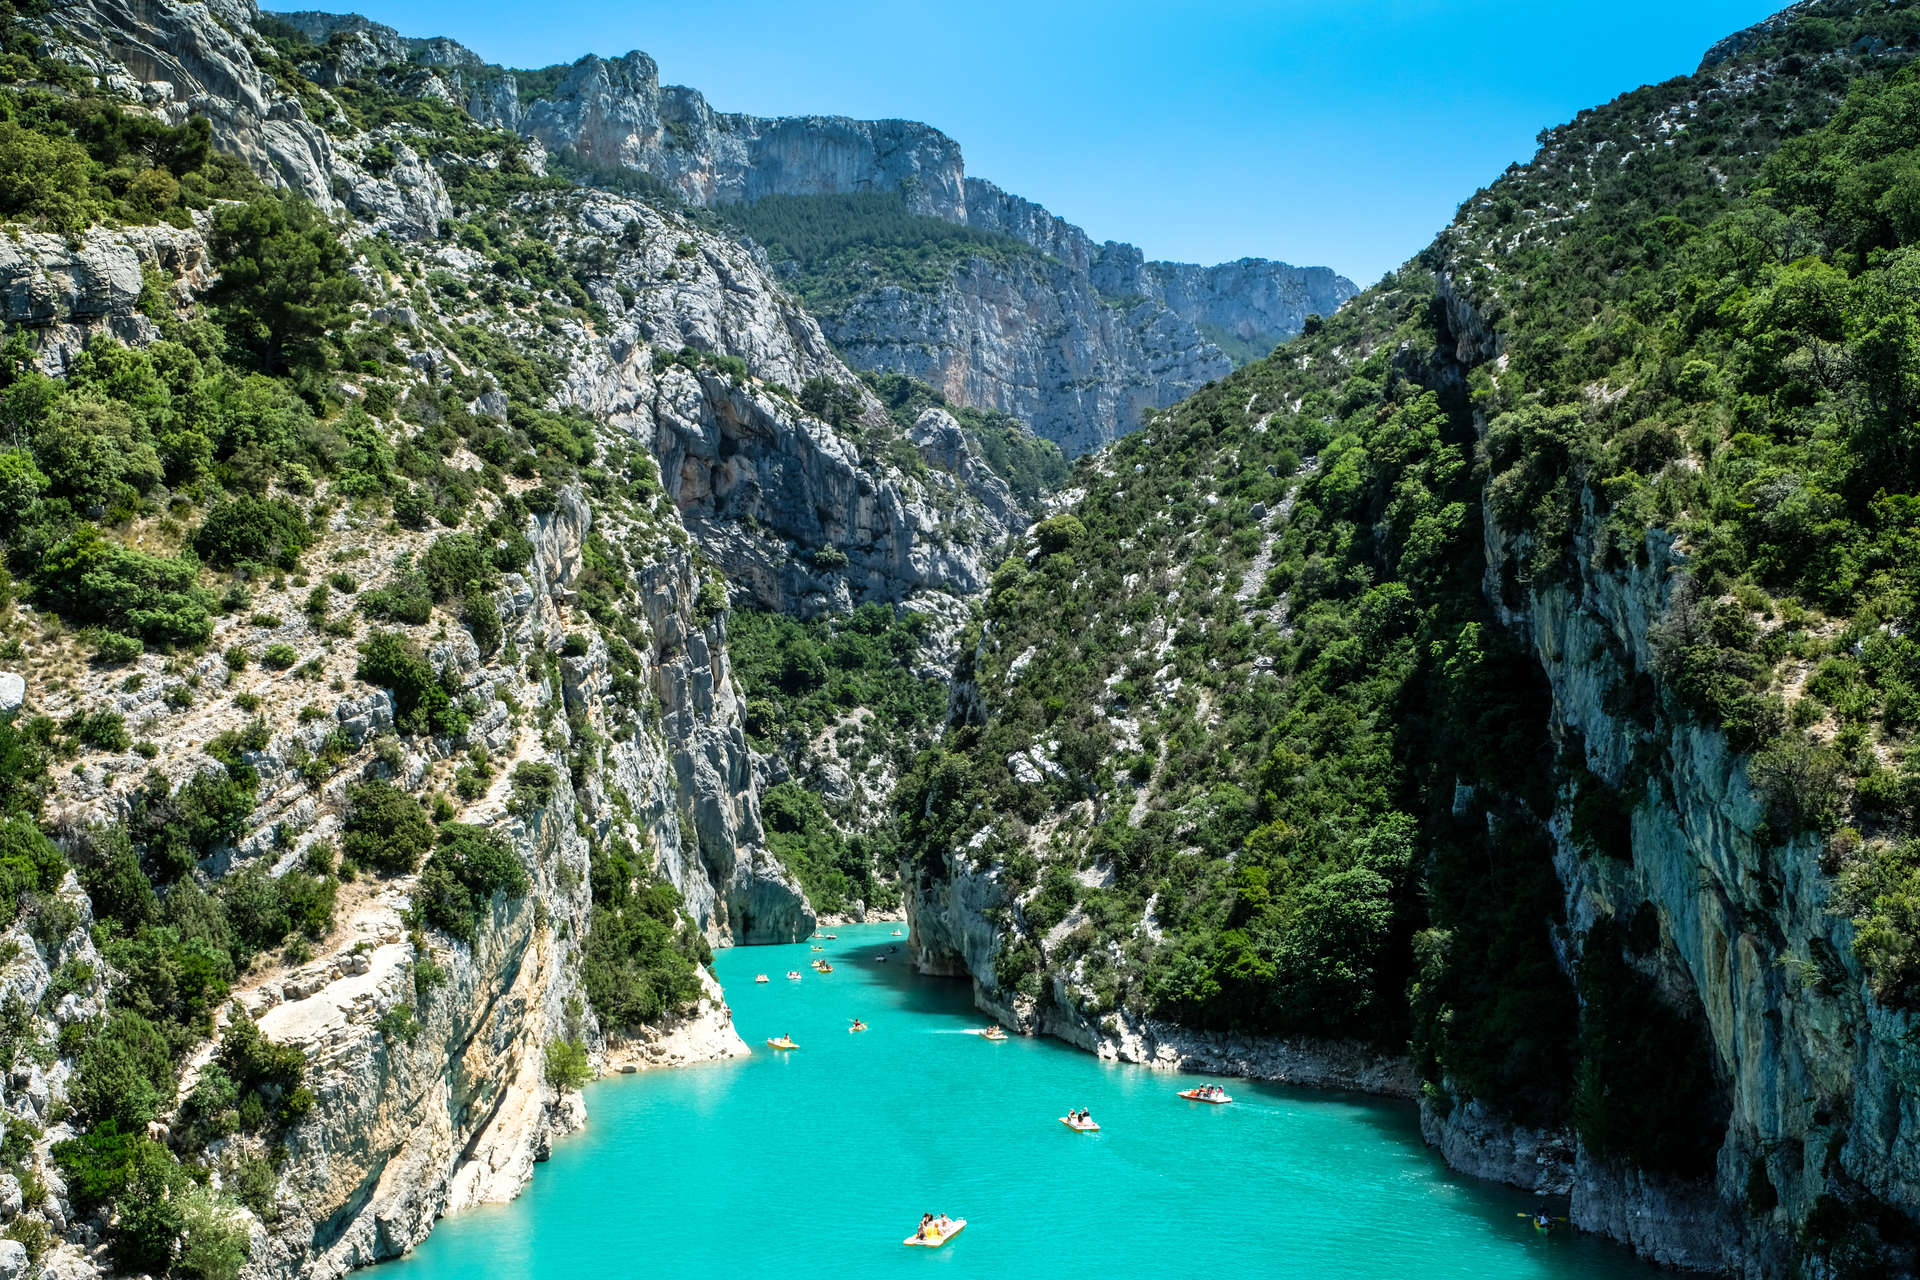 Try kayaking through the magnificent Gorges du Verdon